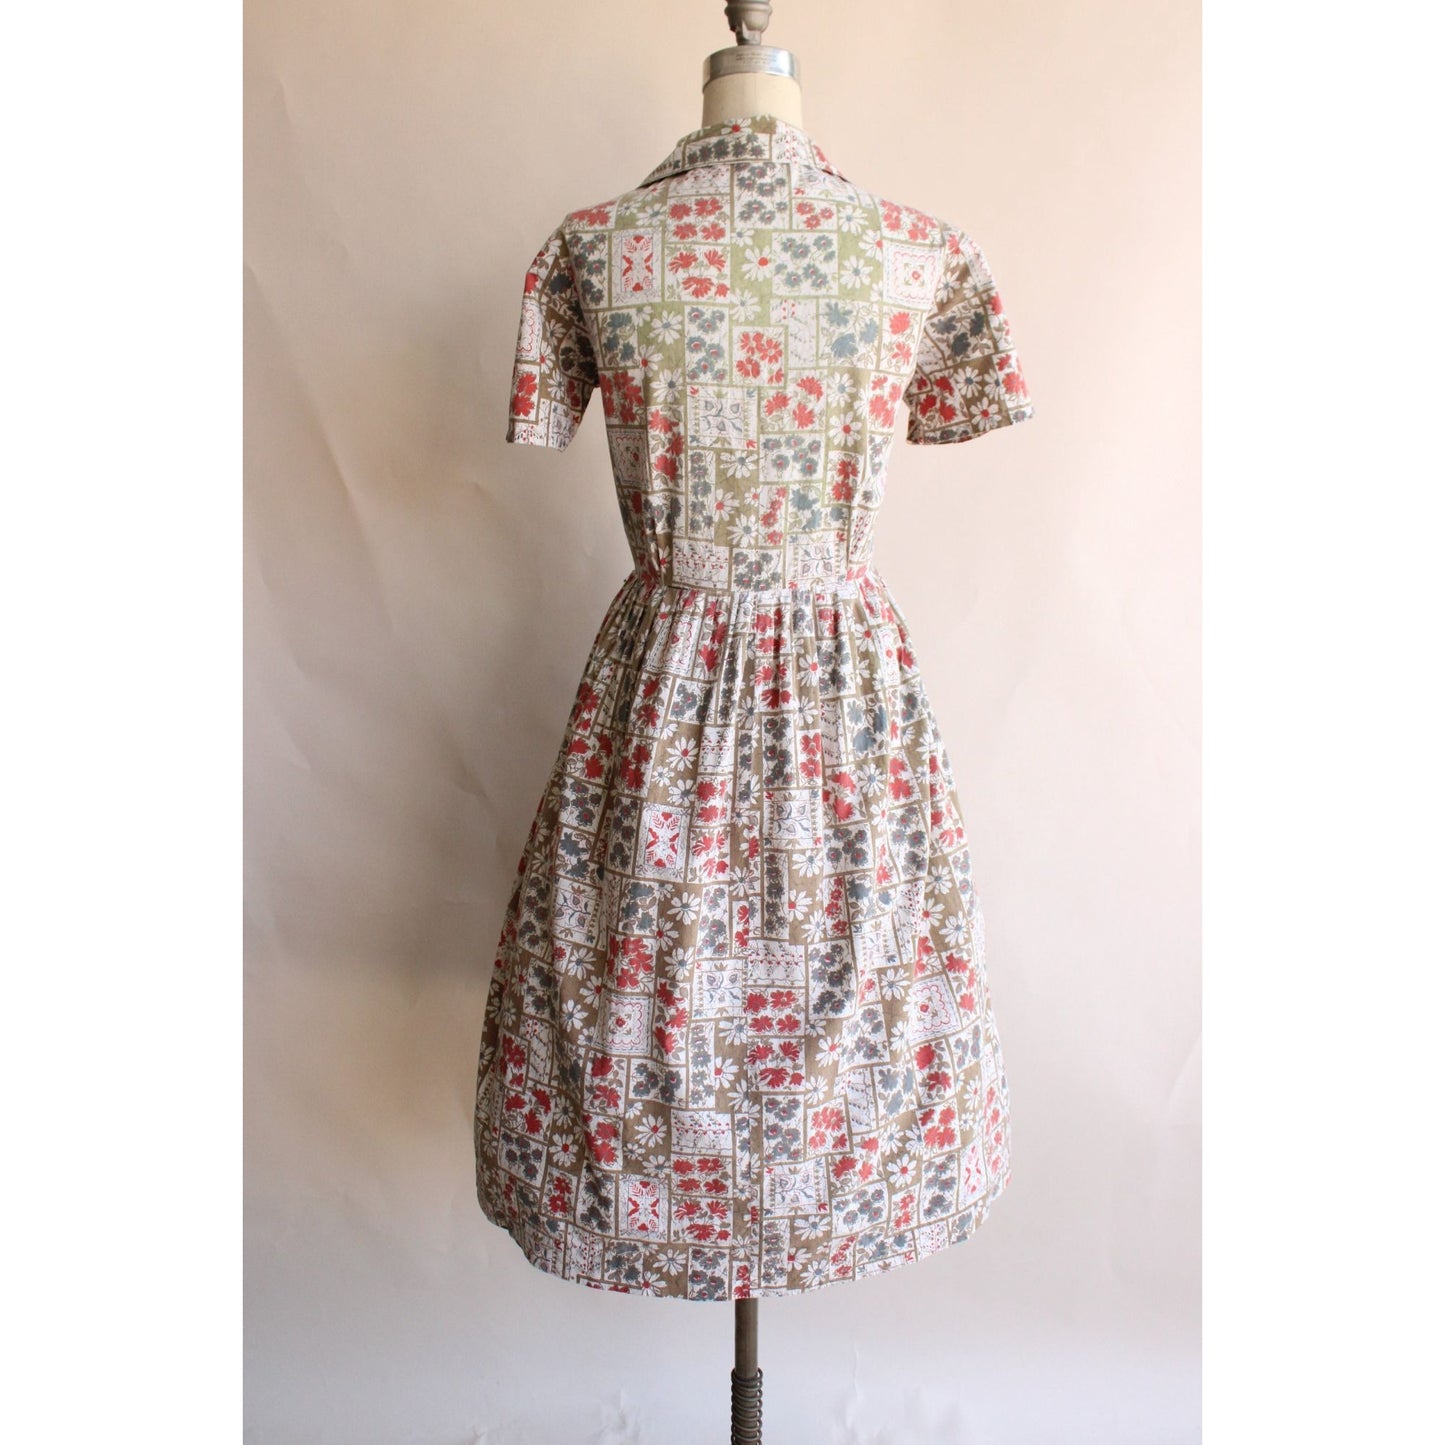 Vintage 1950s 1960s Sears Wildflower Print Cotton Shirtwaist Dress